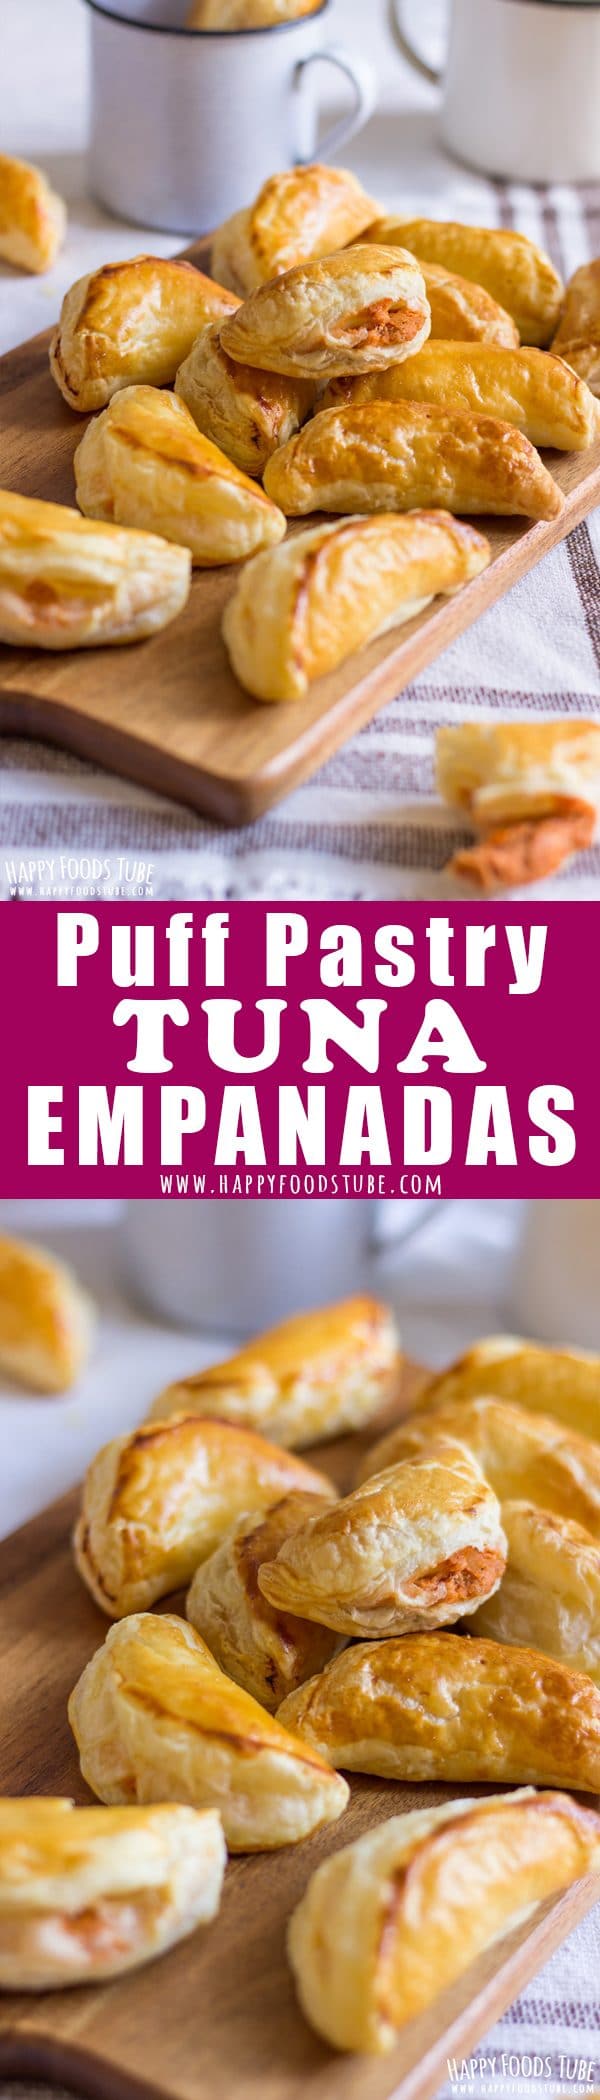 Puff Pastry Tuna Empanadas Recipe Picture